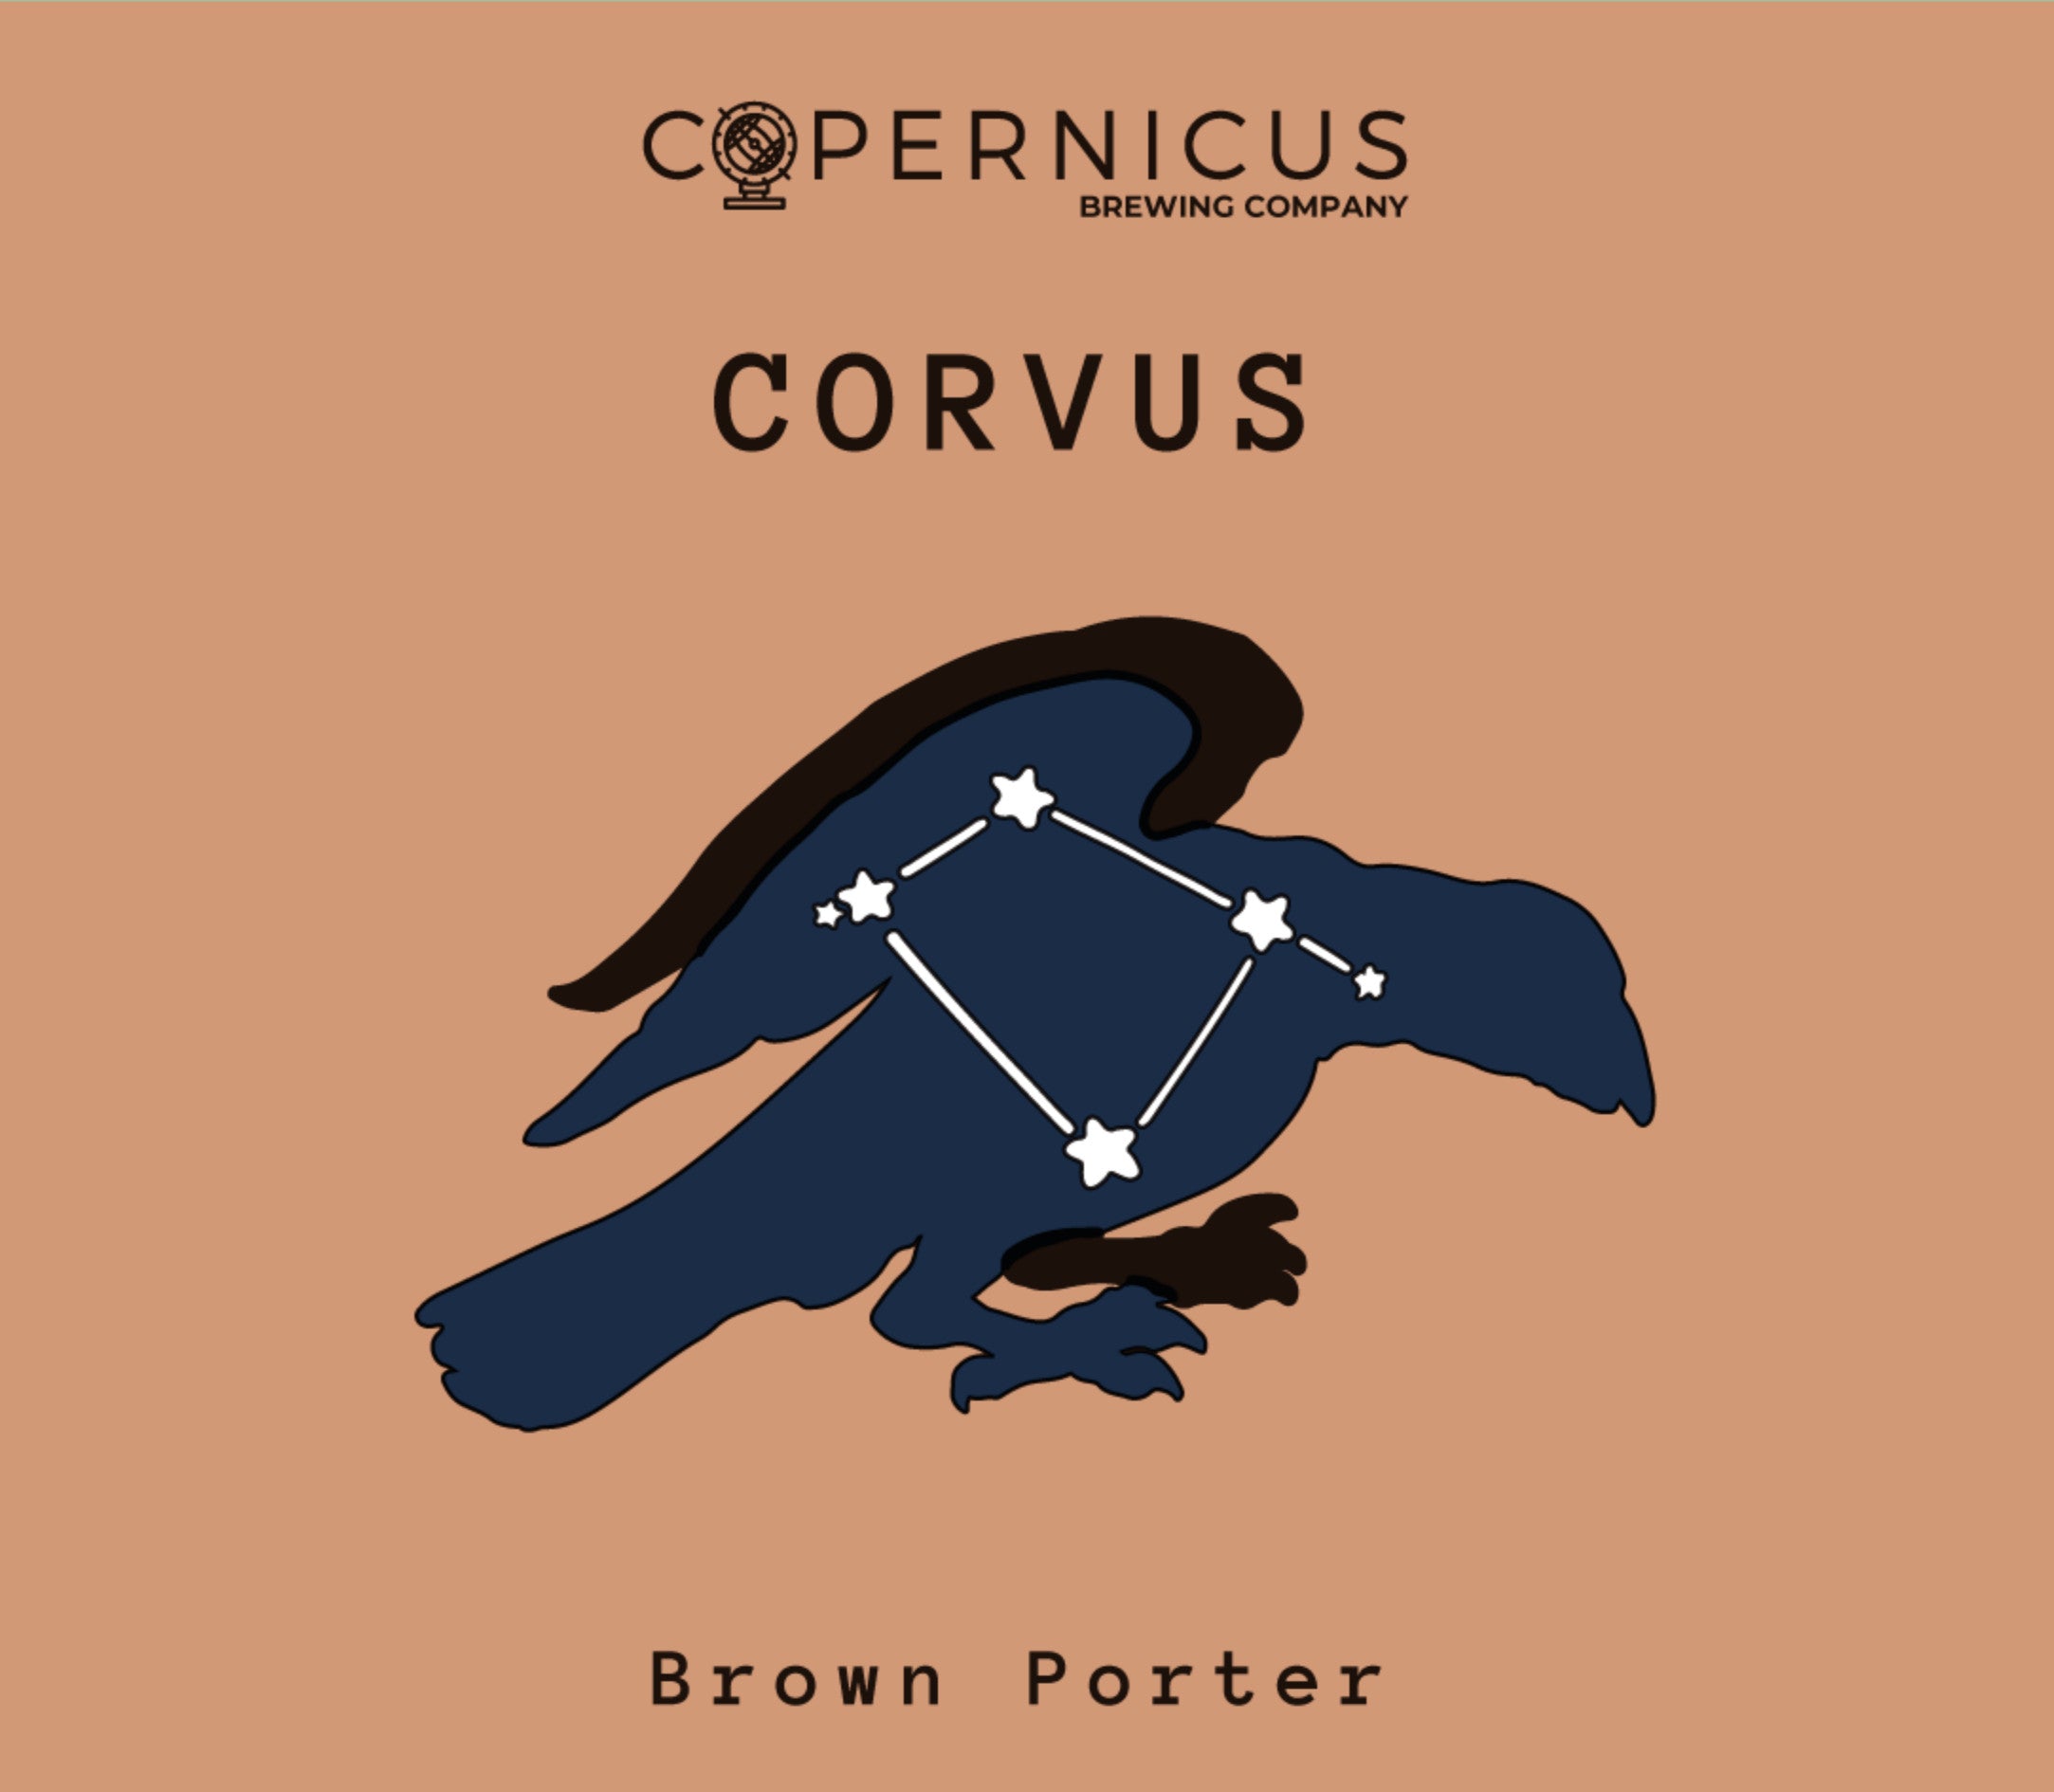 Etiqueta de cerveza Copernicus Corvus - Brown Porter